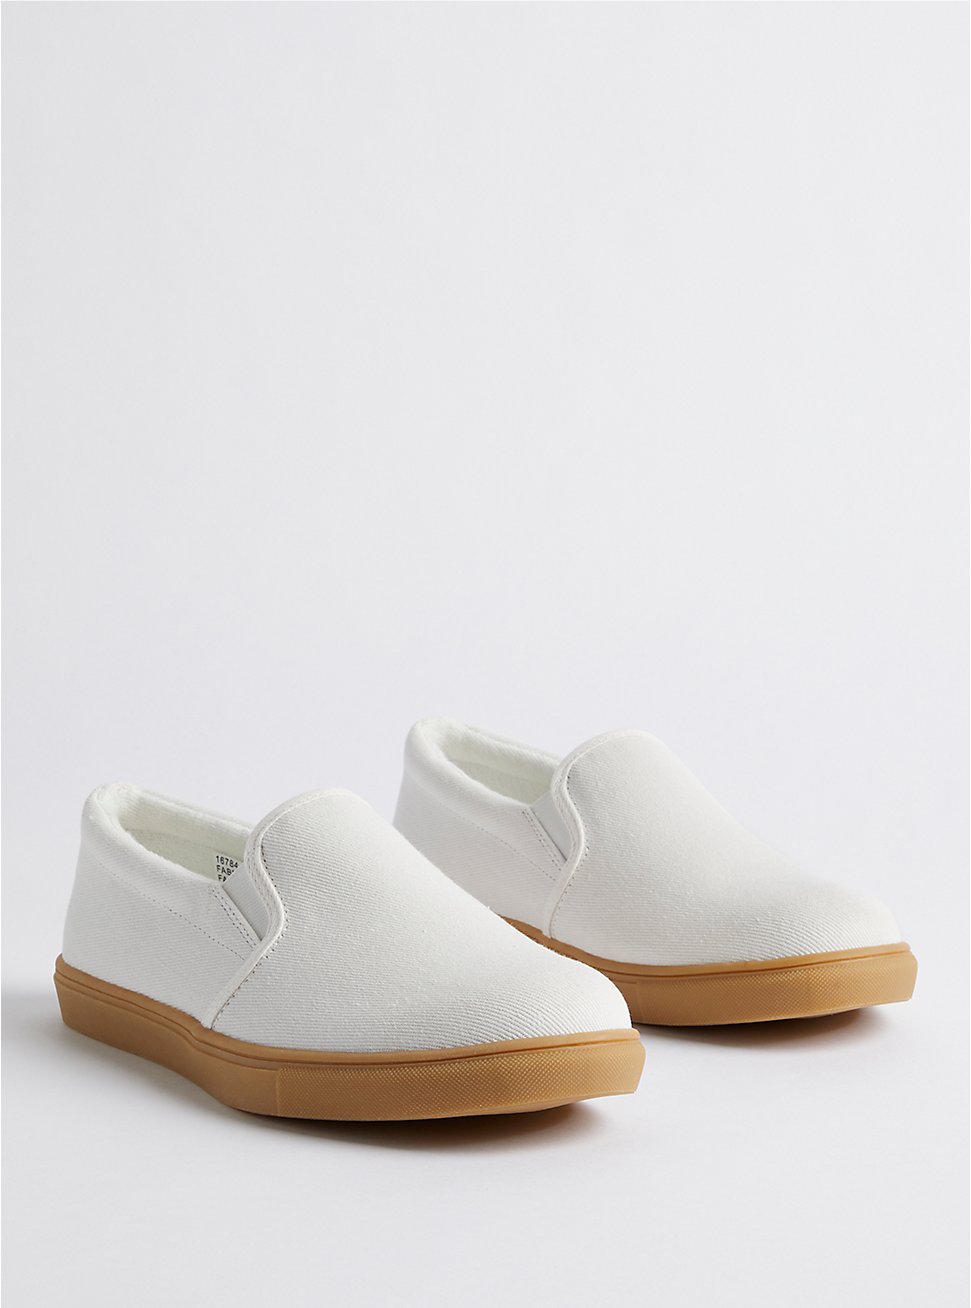 Plus Size Slip-On Sneaker - Canvas White (WW), IVORY, hi-res